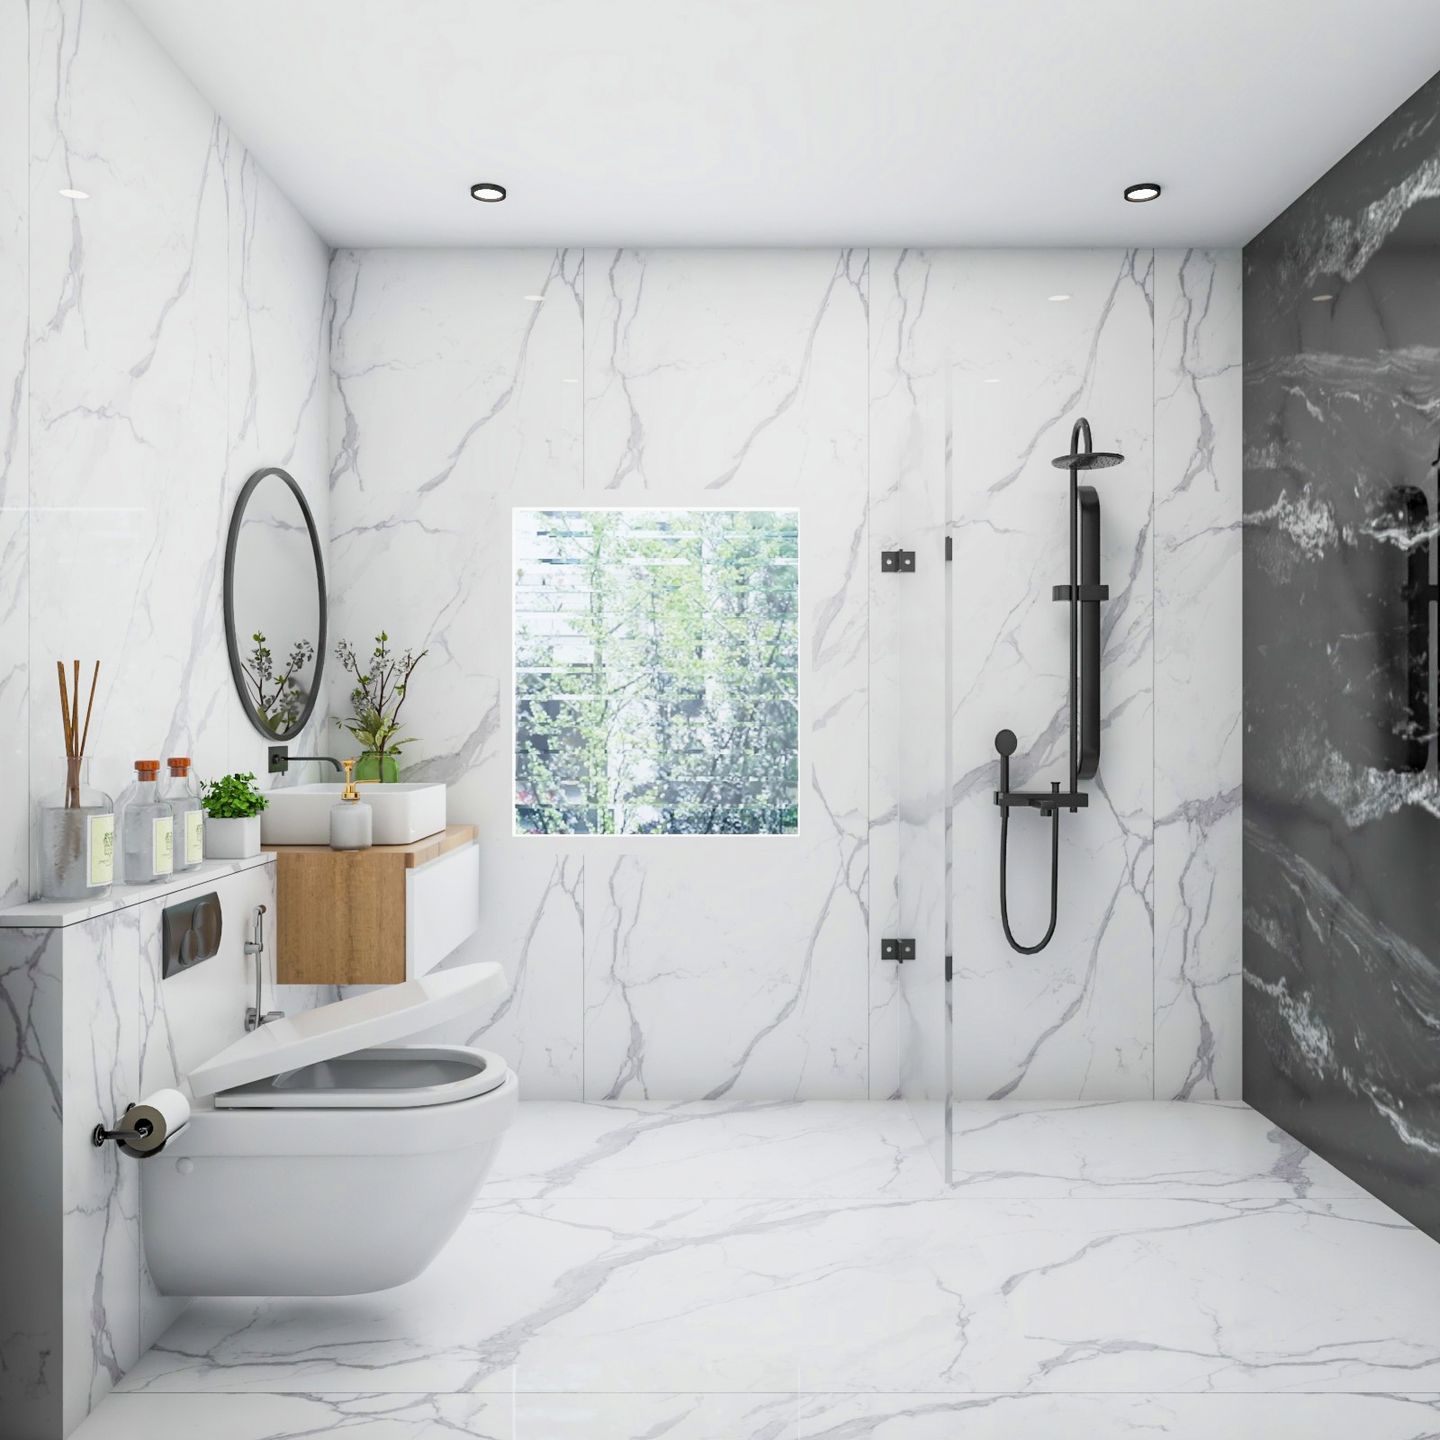 Bathroom Design With A Round Mirror - Livspace